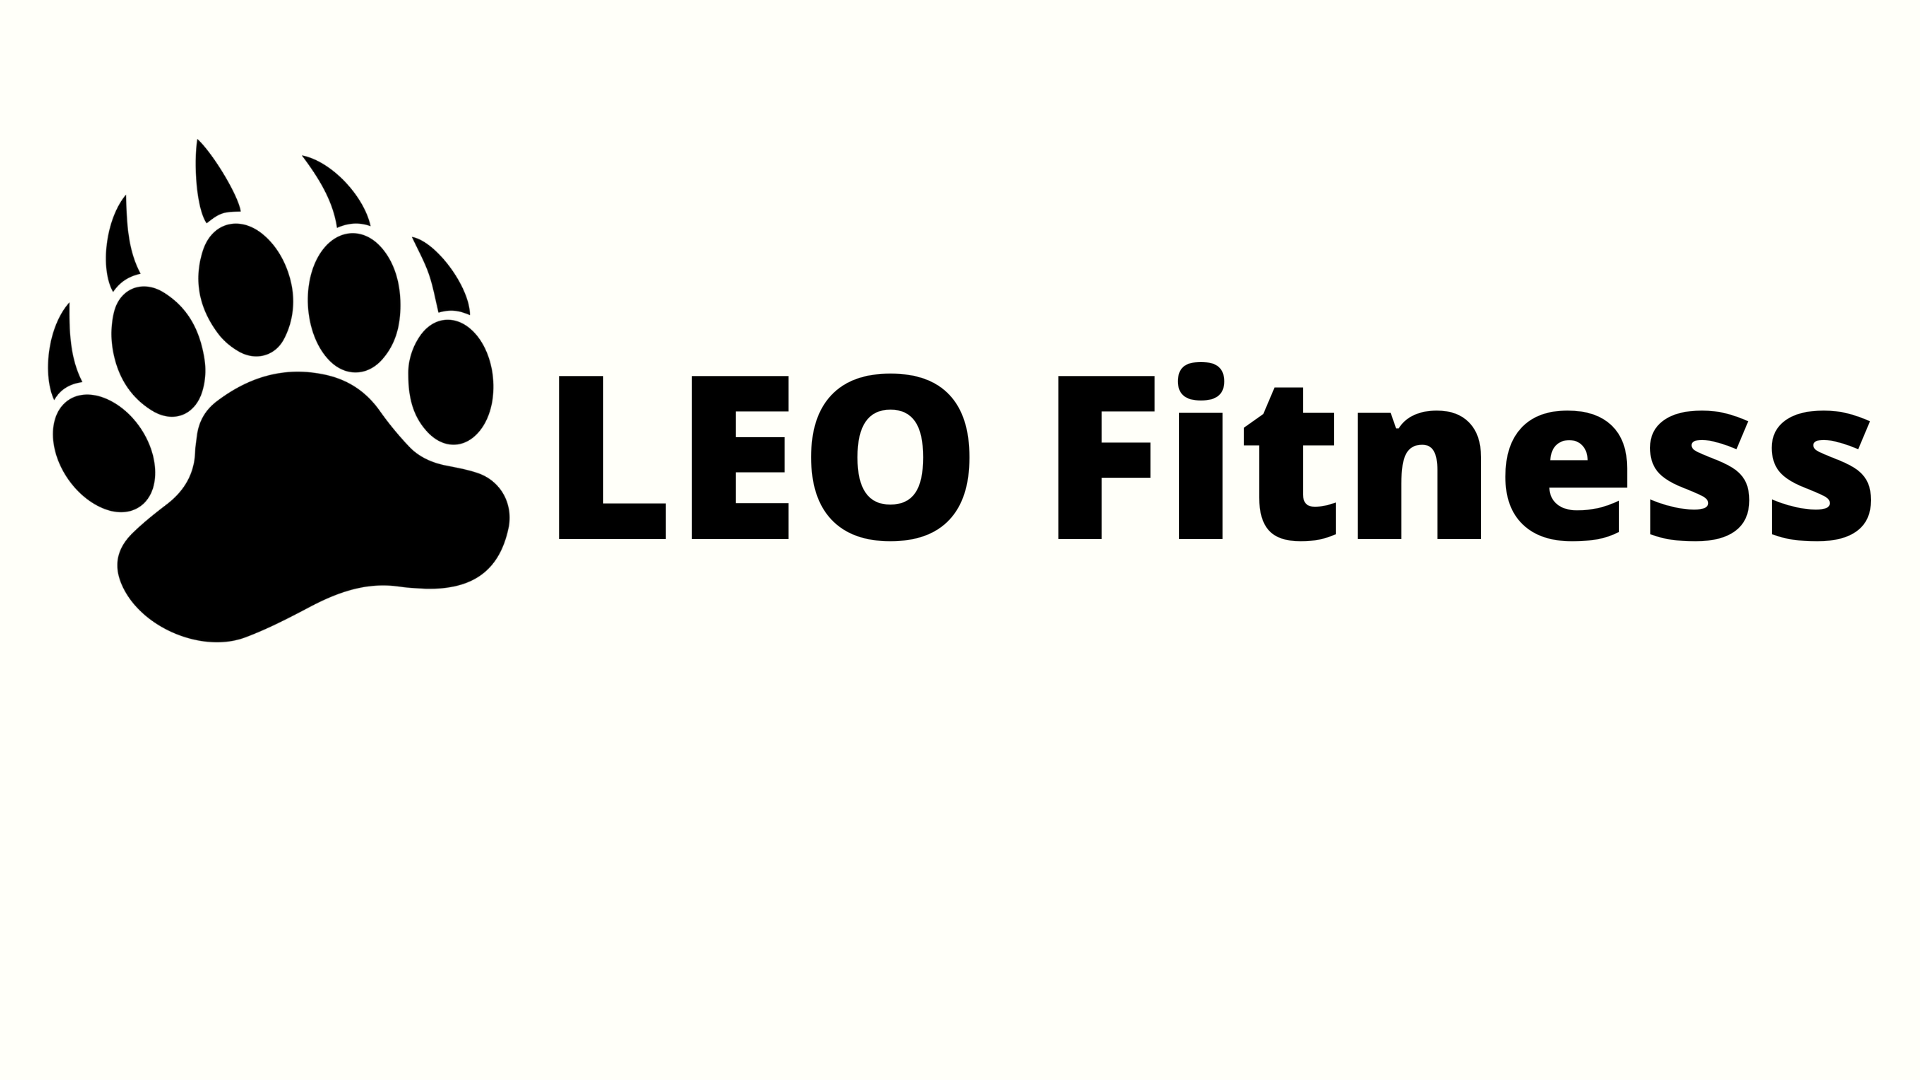 Leo fitnesss